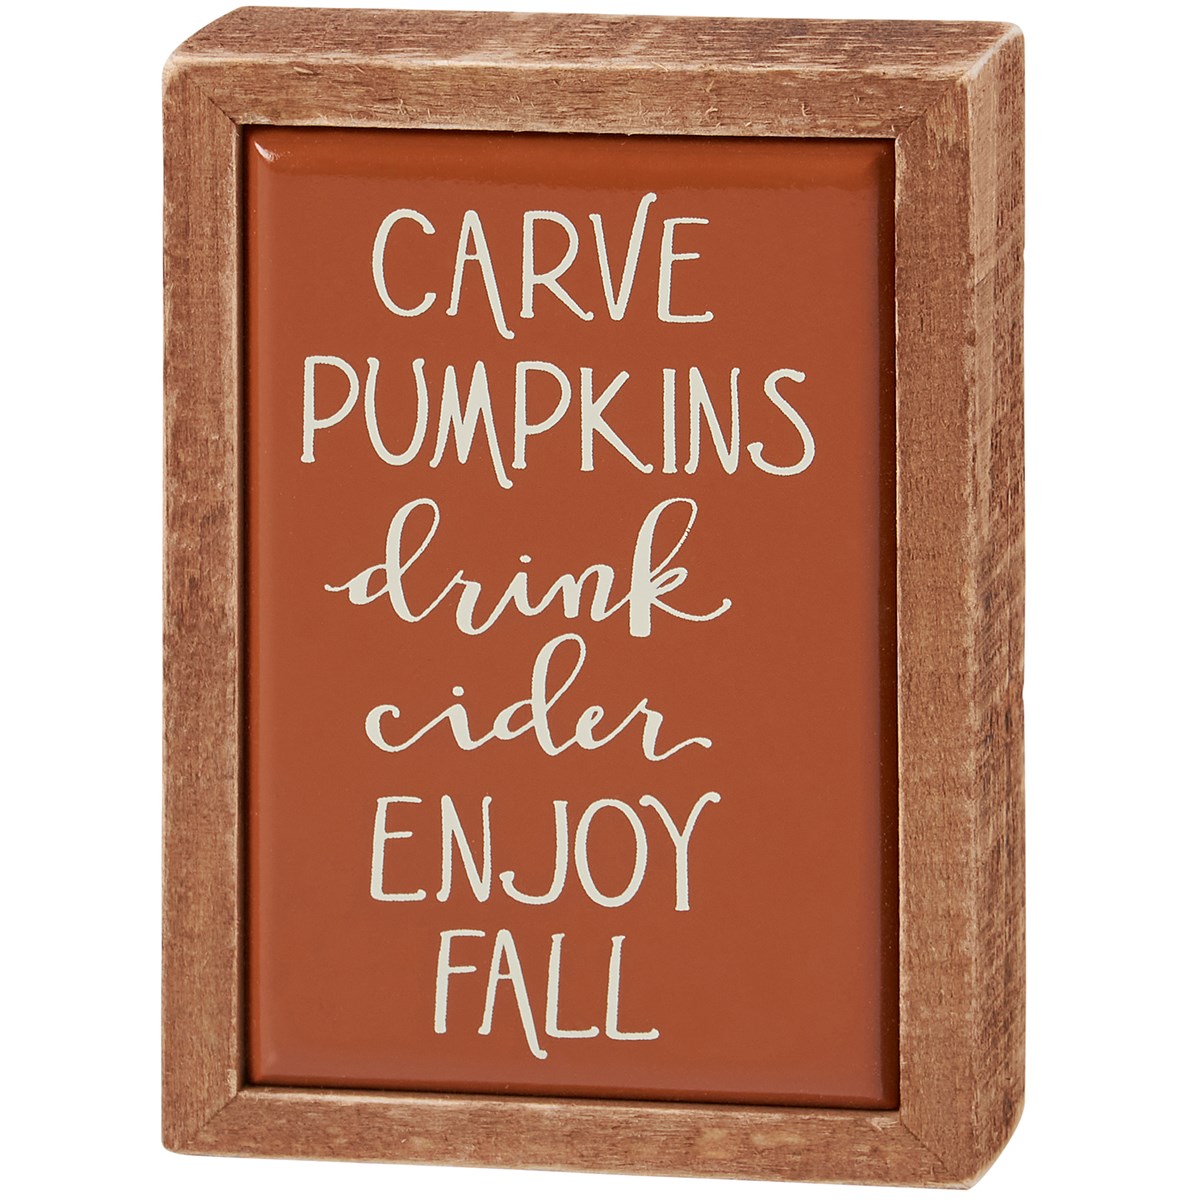 Enjoy Fall Box Sign Mini - Wood